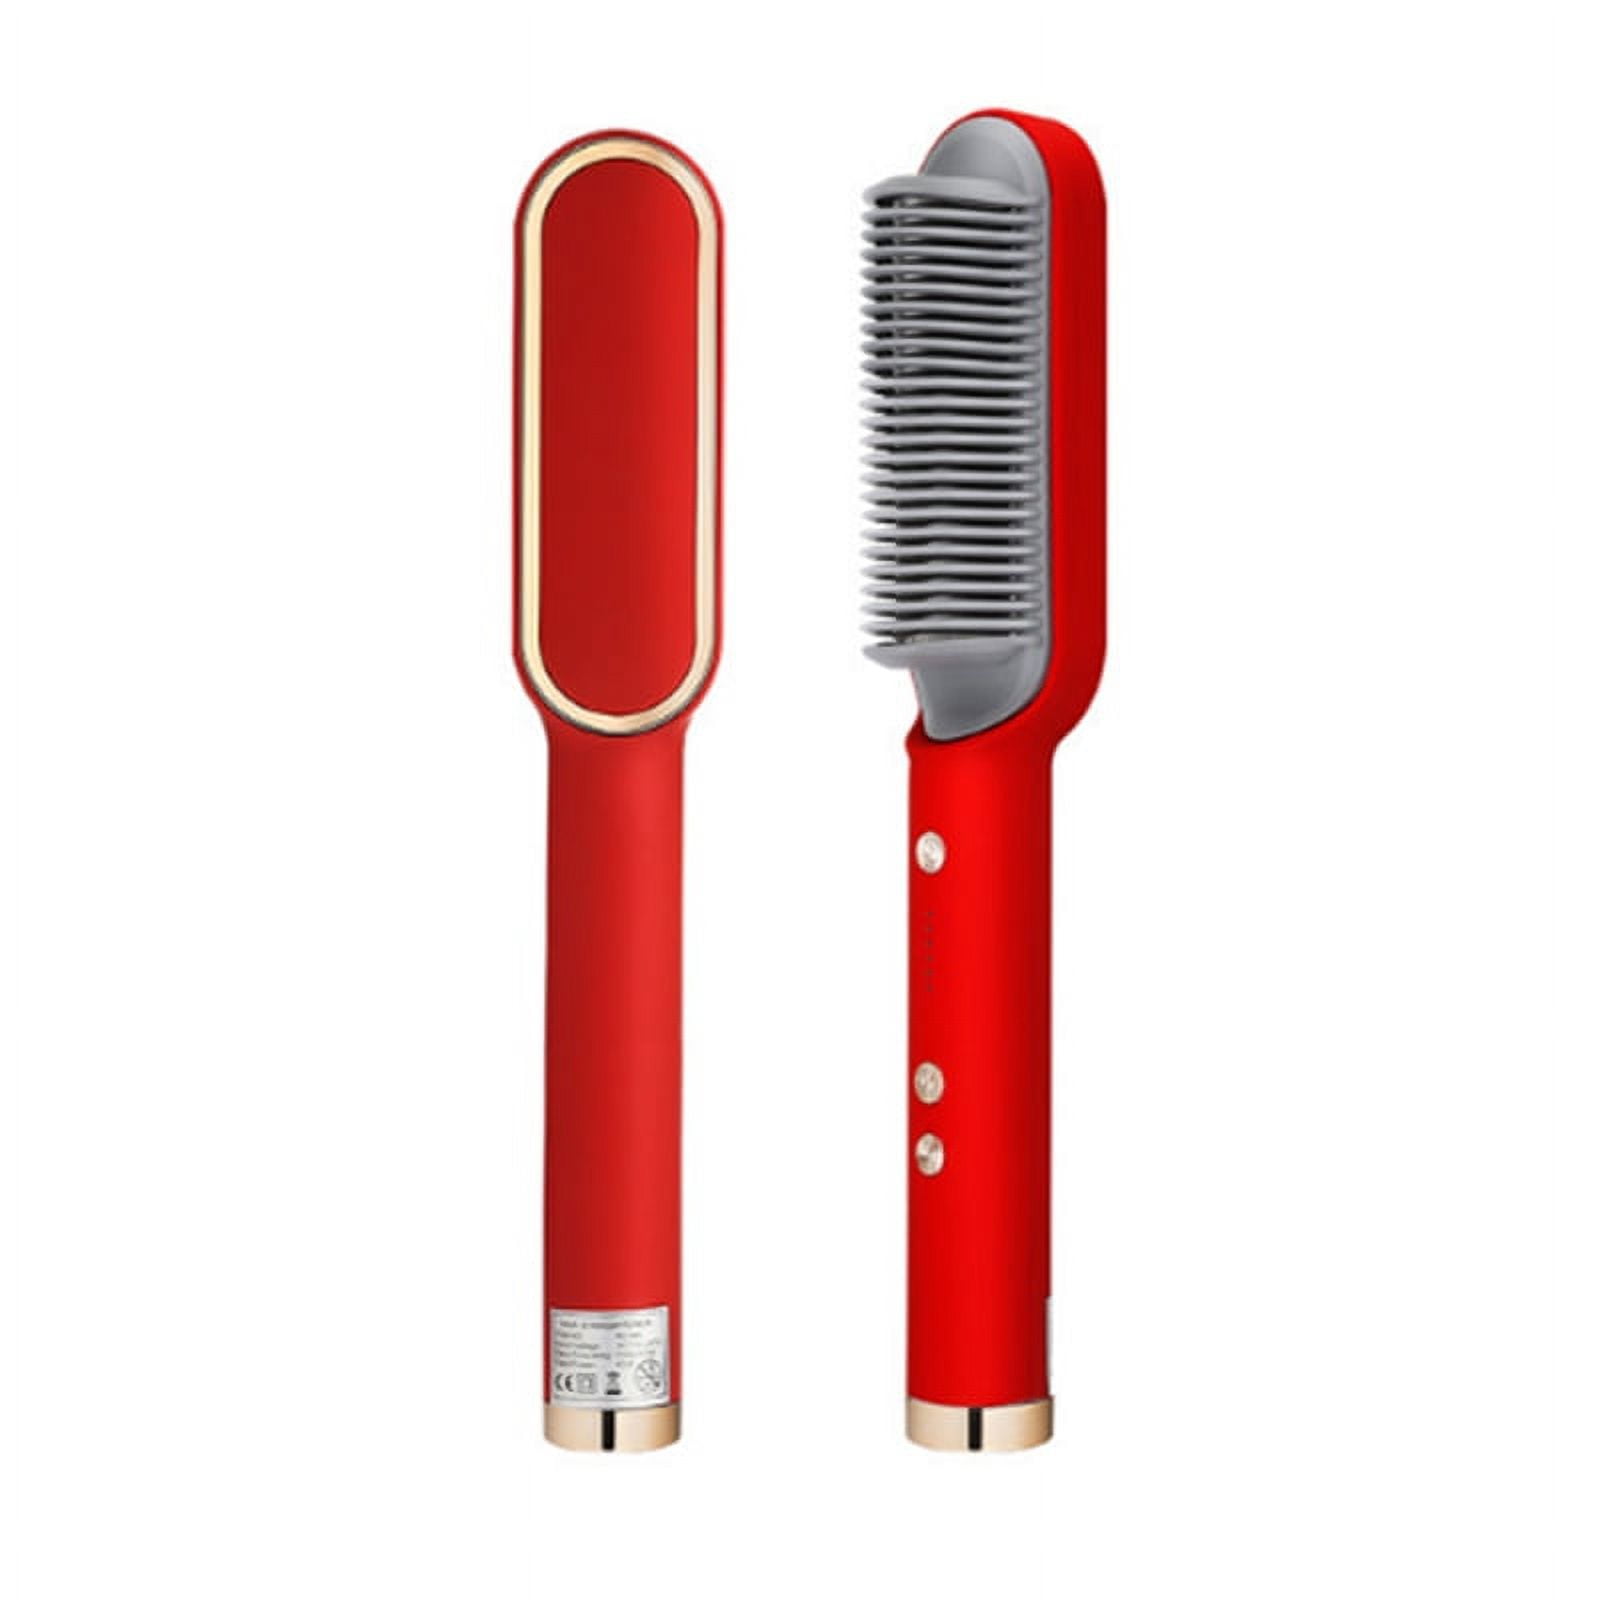 4011005 - Straight Fryer High Heat Brush 28 - Red